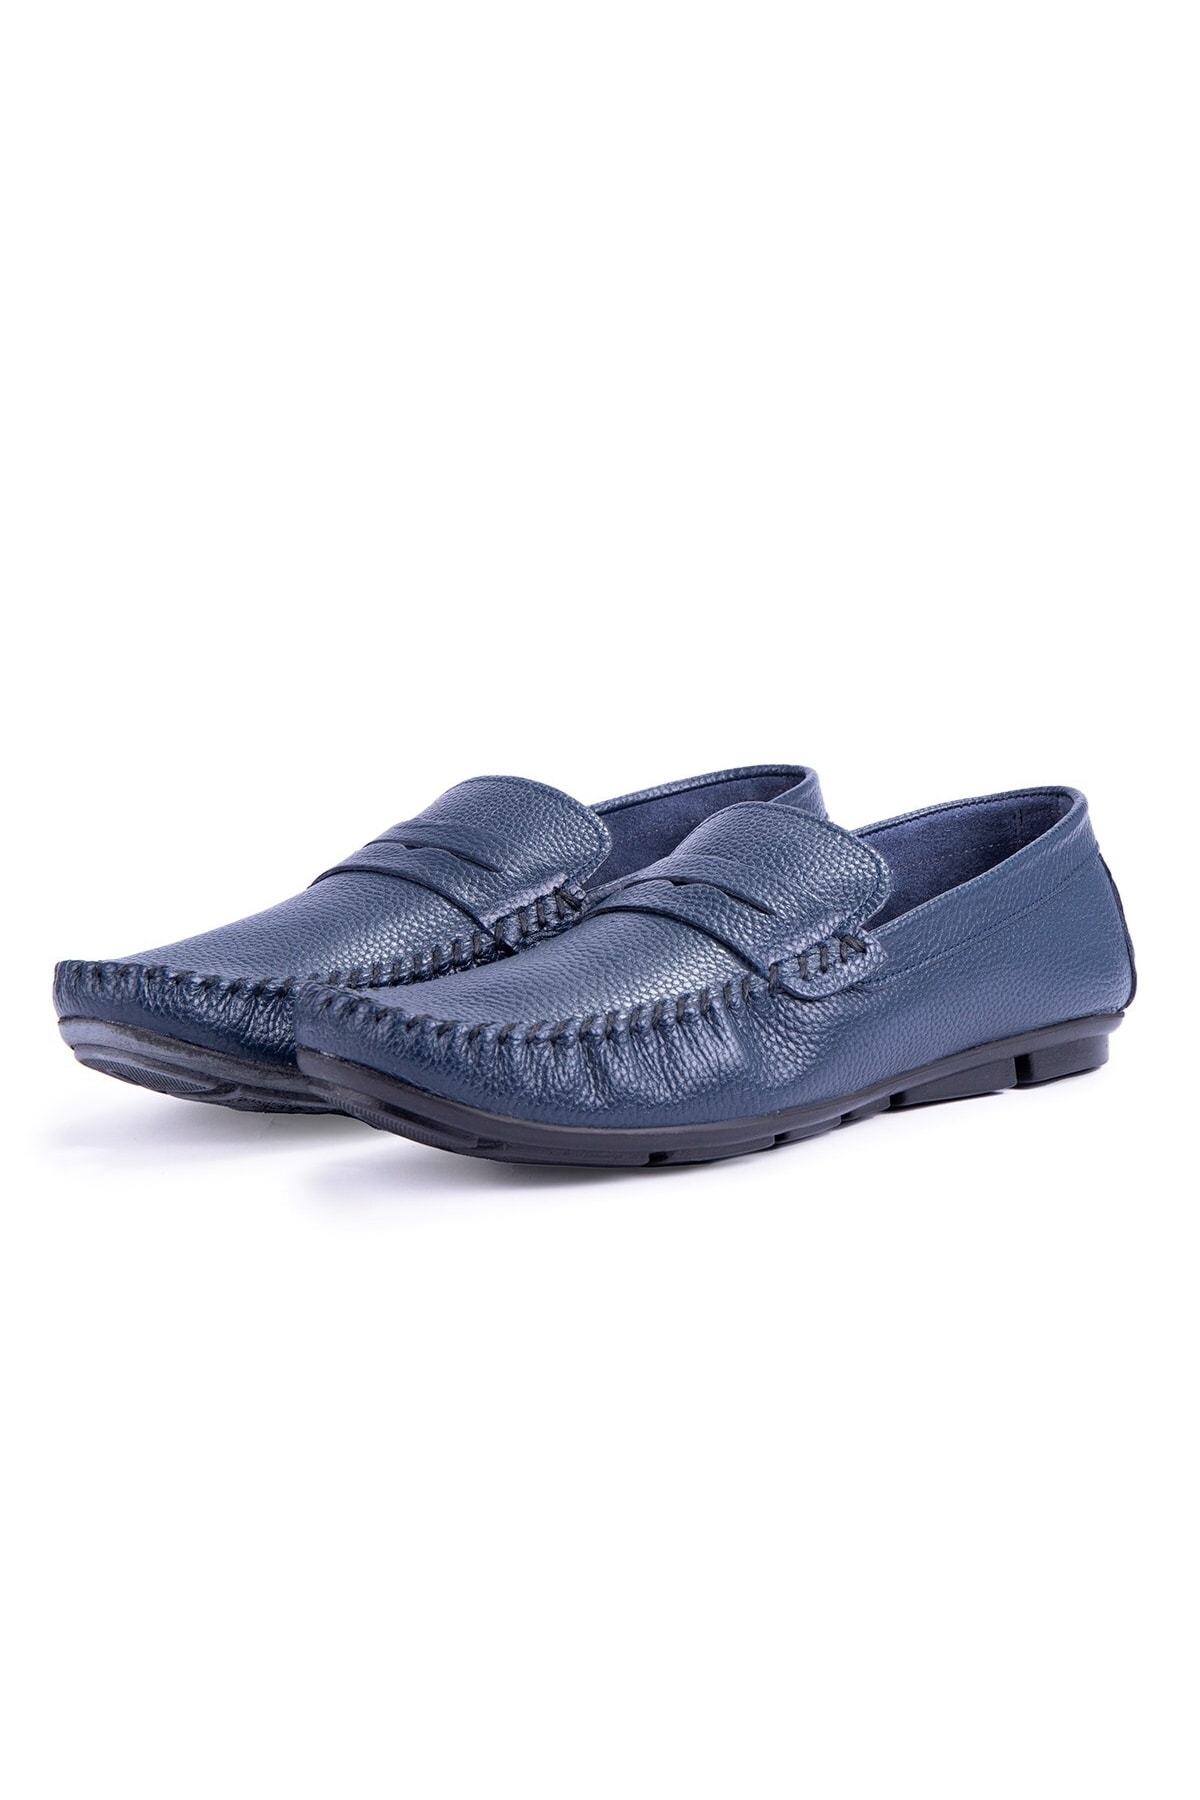 Levně Ducavelli Artsy Genuine Leather Men's Casual Shoes, Rog Loafer Shoes